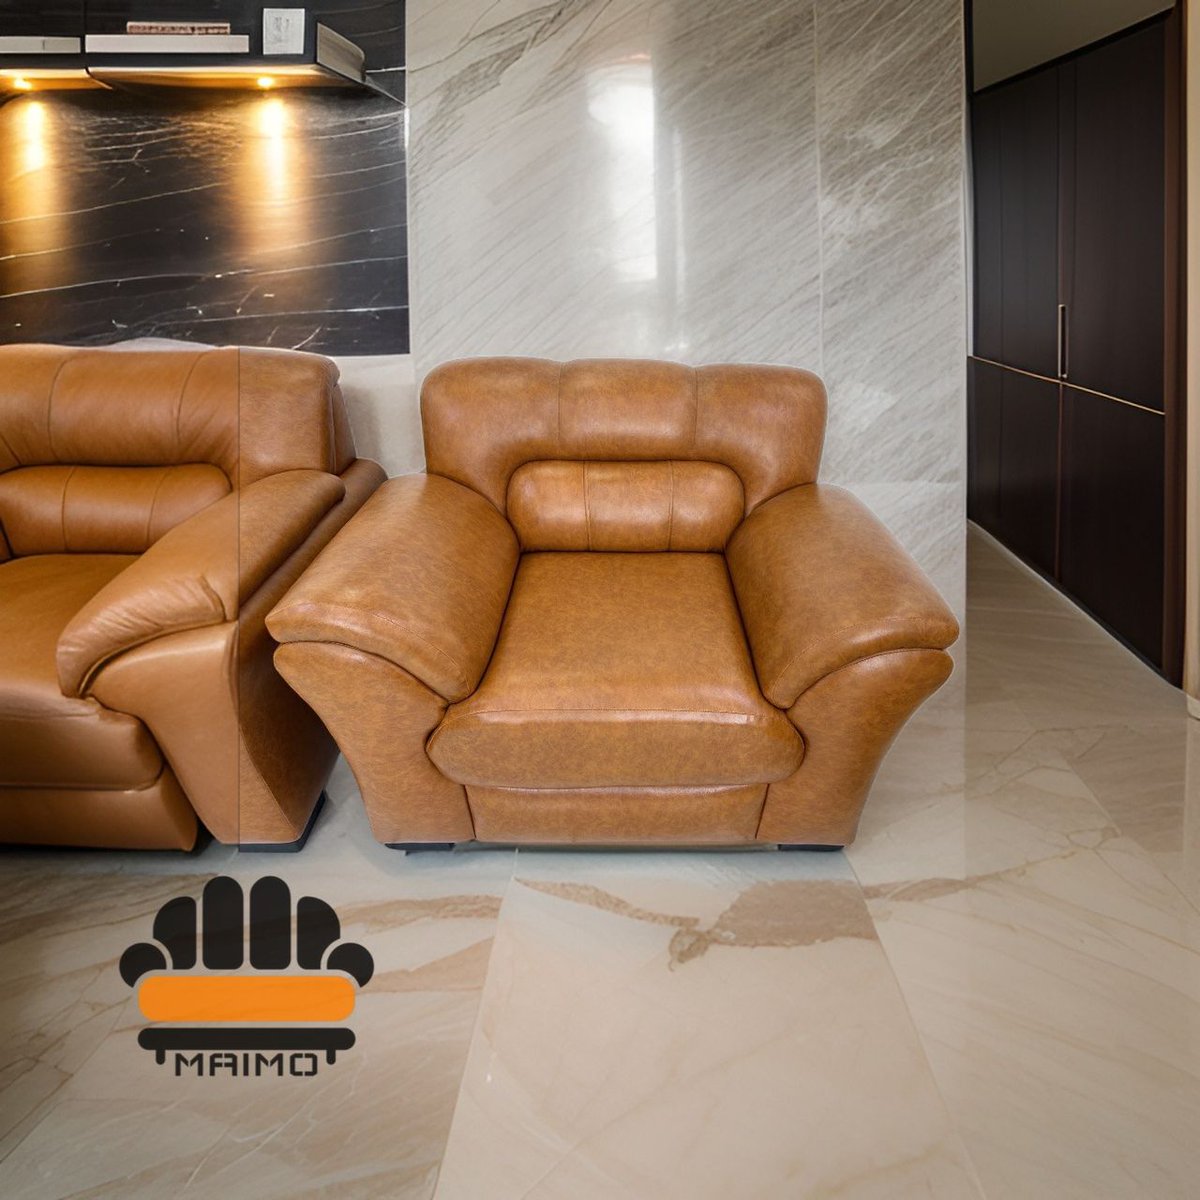 Furniture Redefined, @MaimoFurniture modern designs redefine elegance, making your home a gallery of sophistication #Maimofurniture